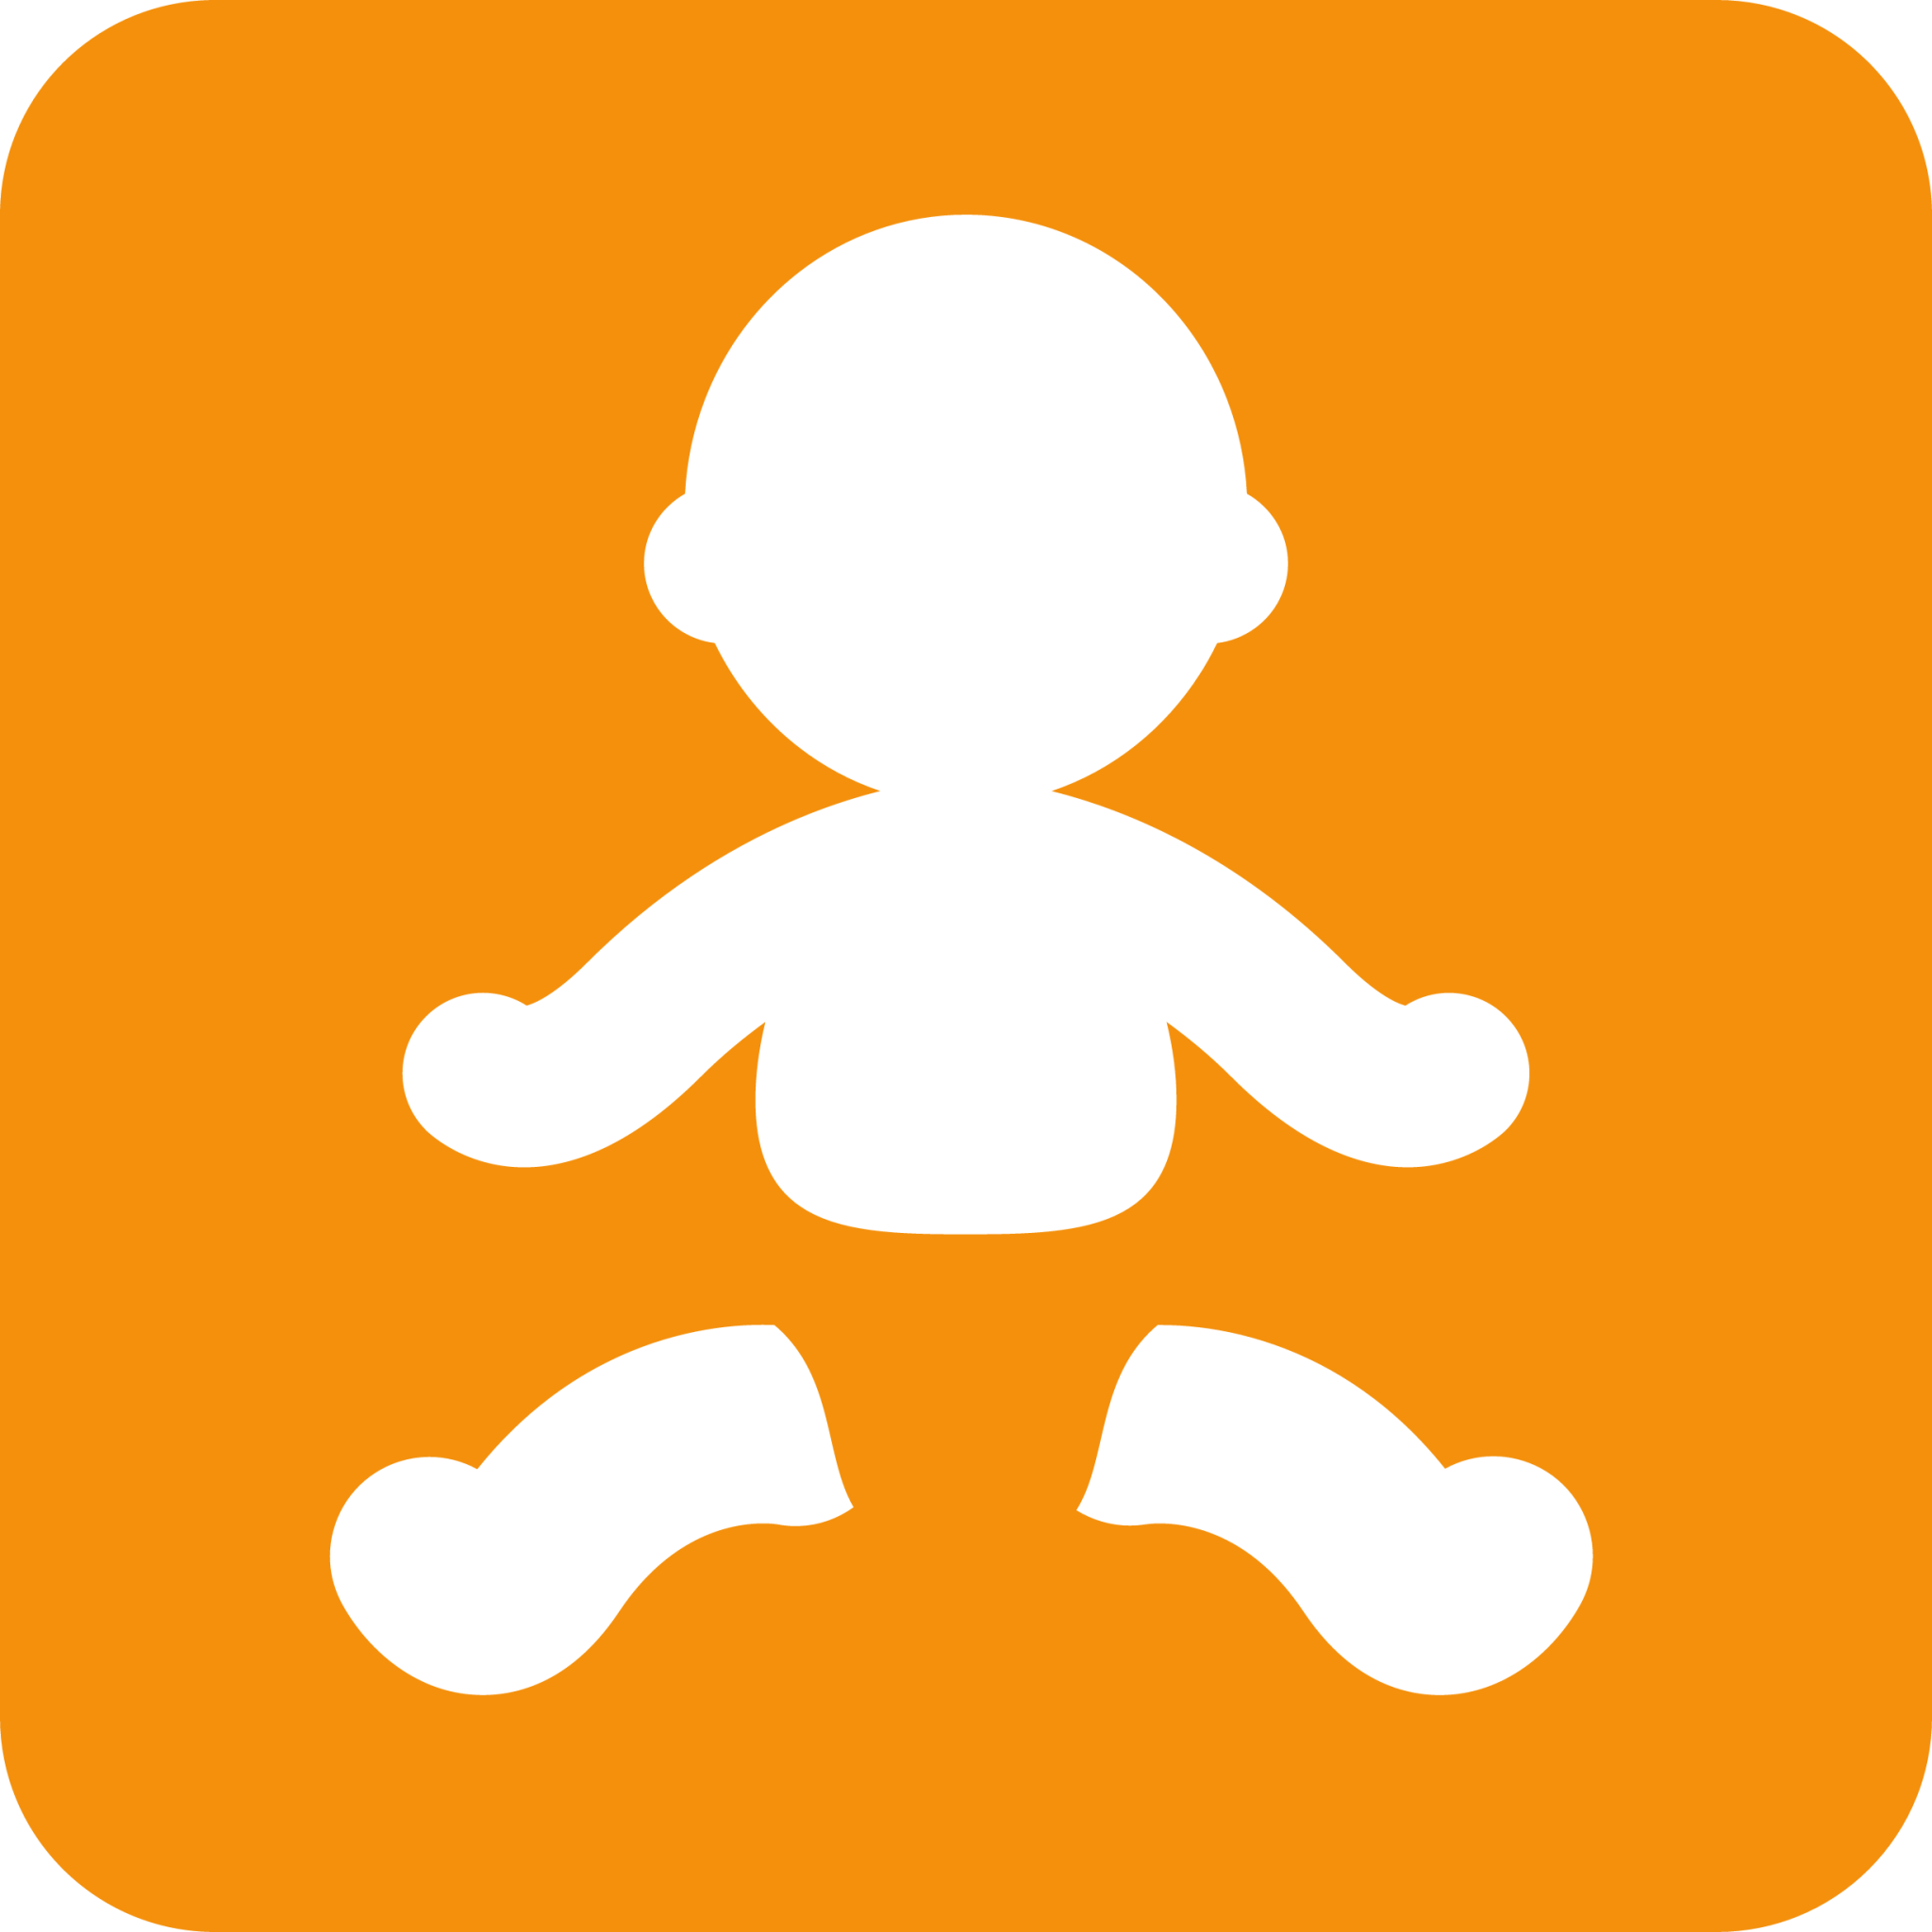 baby symbol emoji